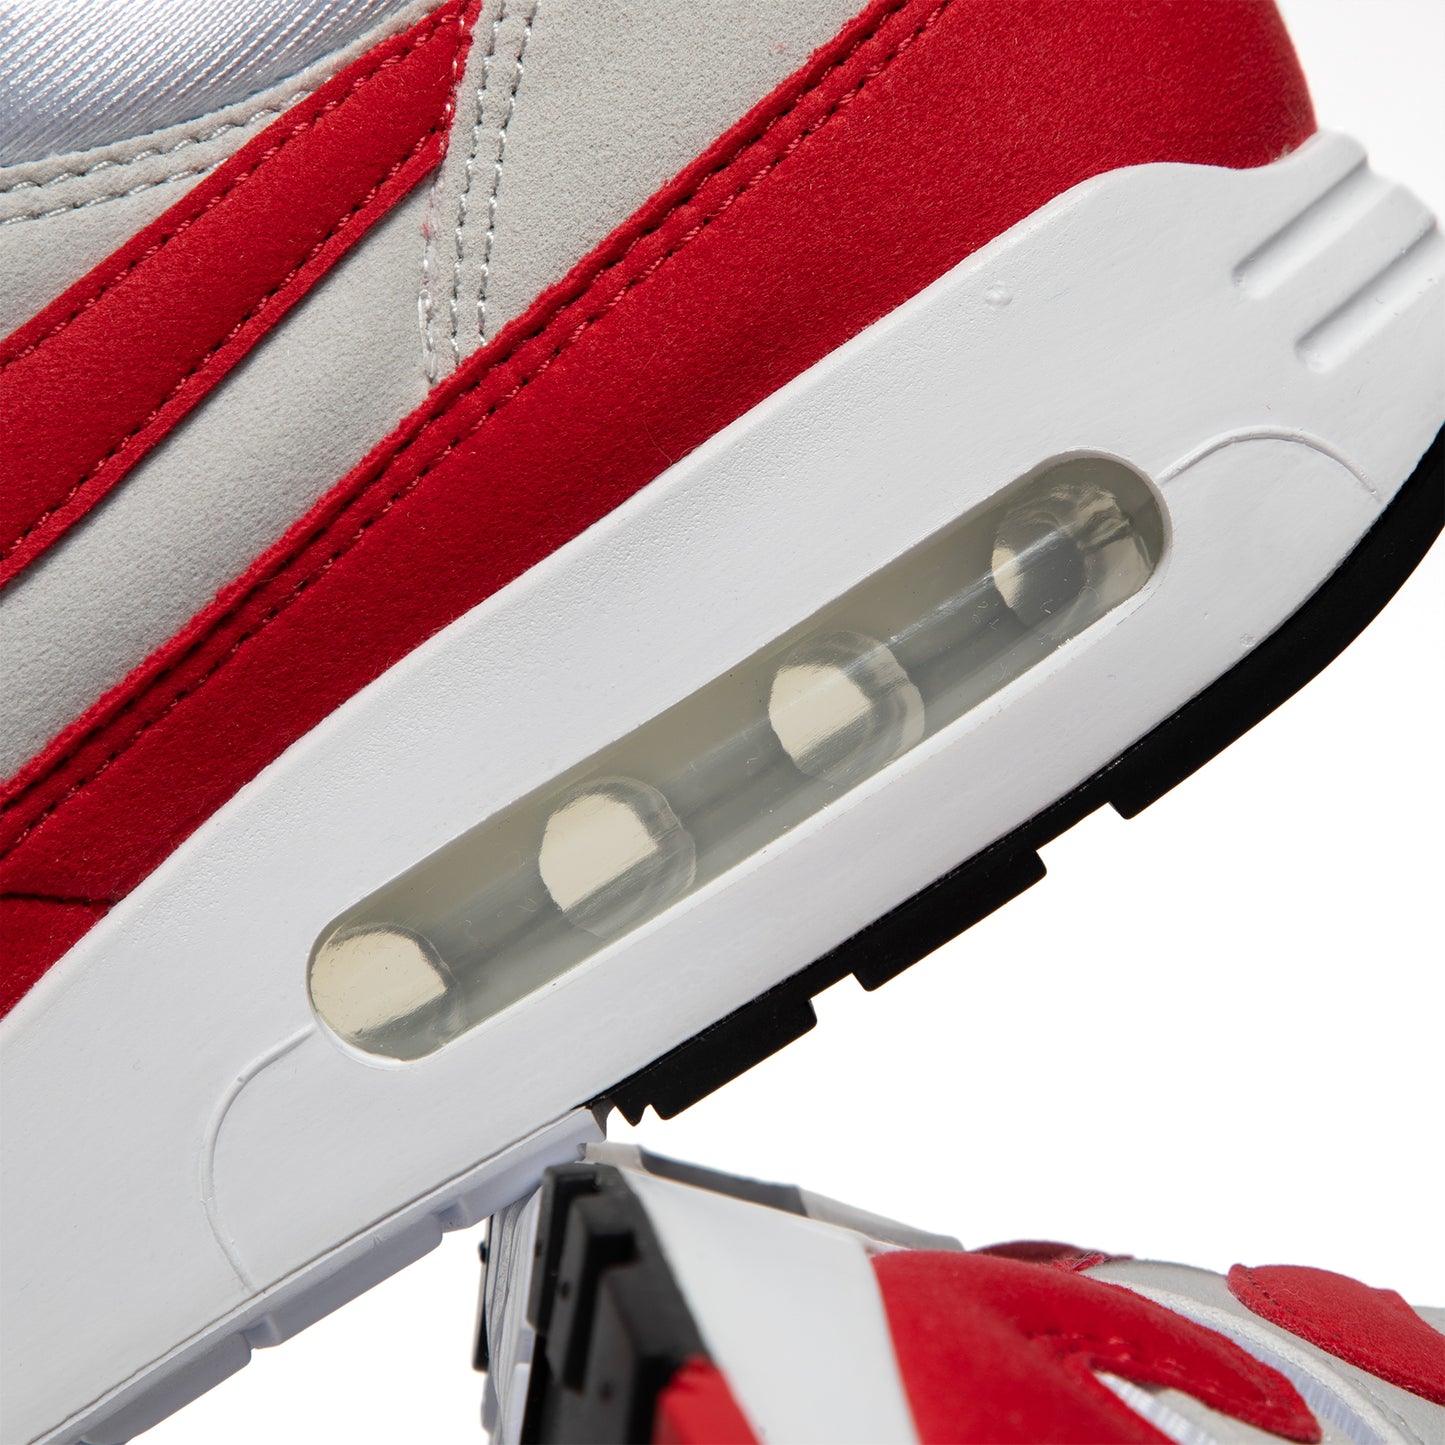 Nike Air Max 1 '86 Premium (White/University Red/Light Neutral Grey)